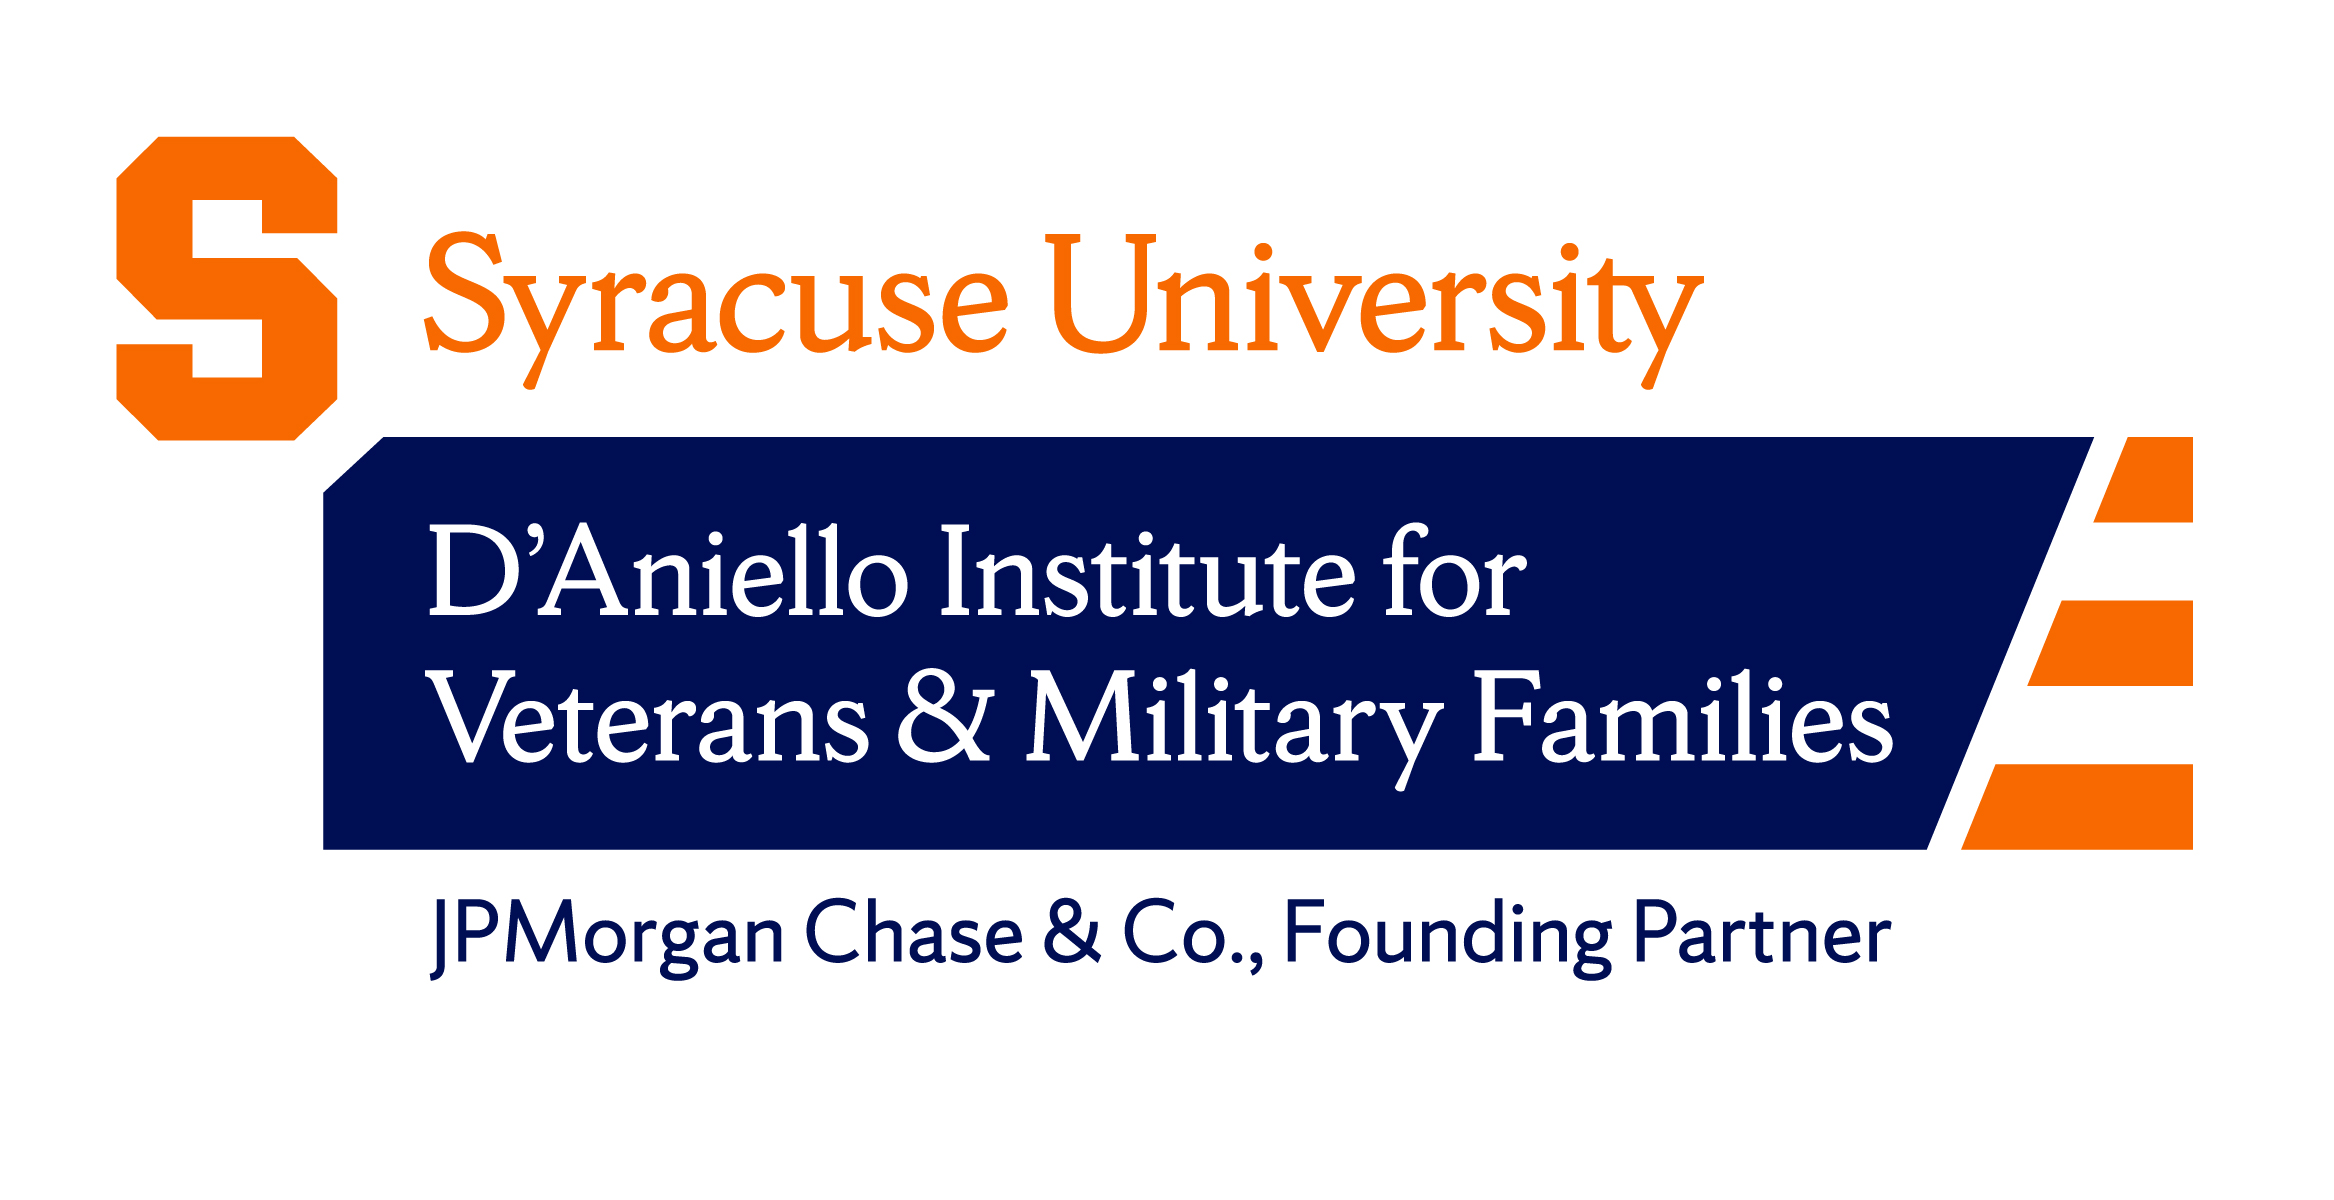 D'Aniello Institute for Veterans & Military Families 